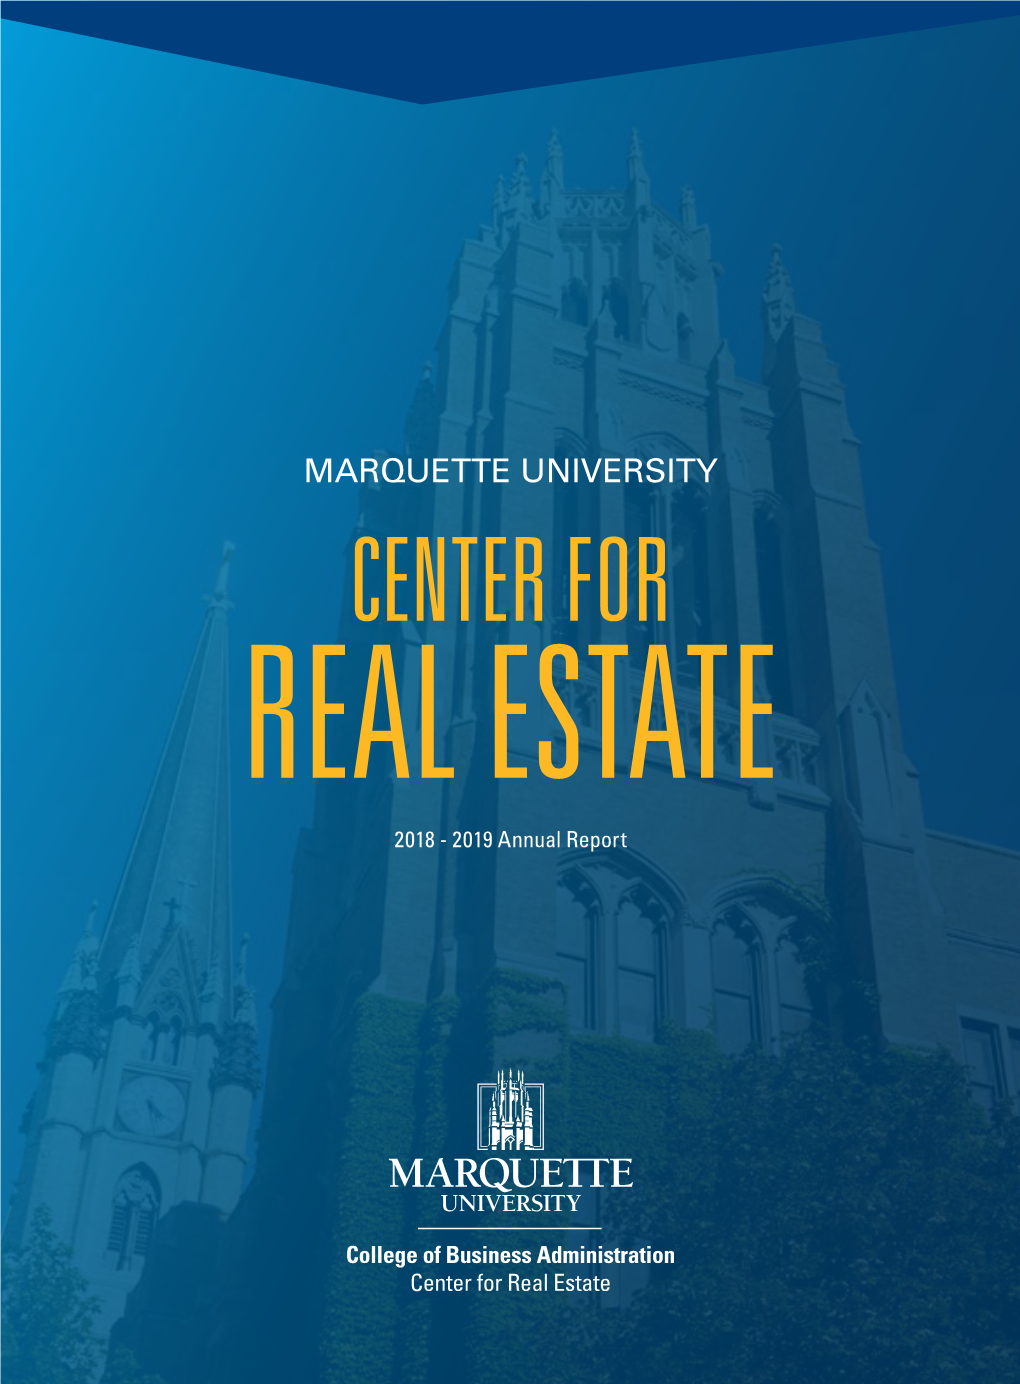 Marquette University Center for Real Estate